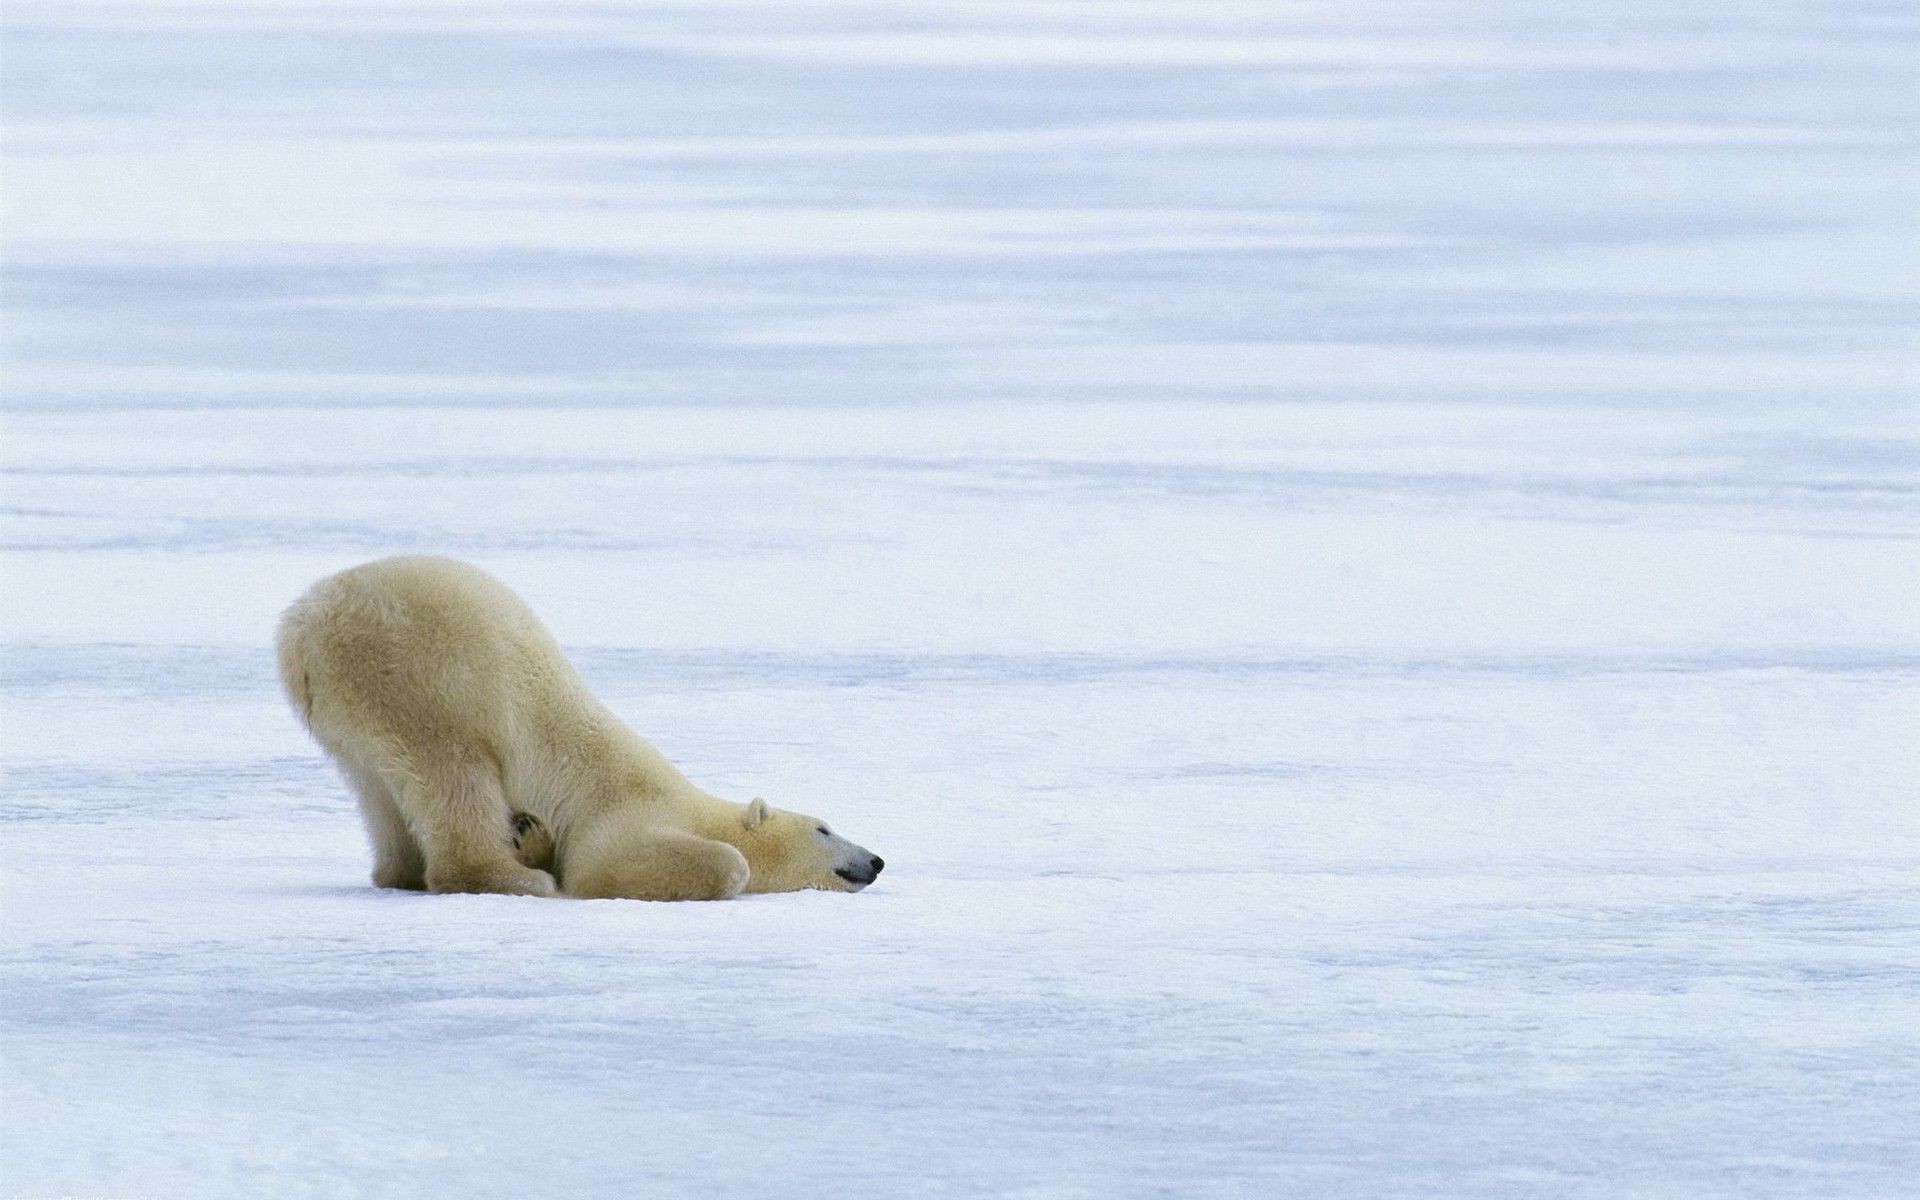 bears snow winter frosty ice cold mammal water wildlife polar tundra outdoors daylight frozen nature